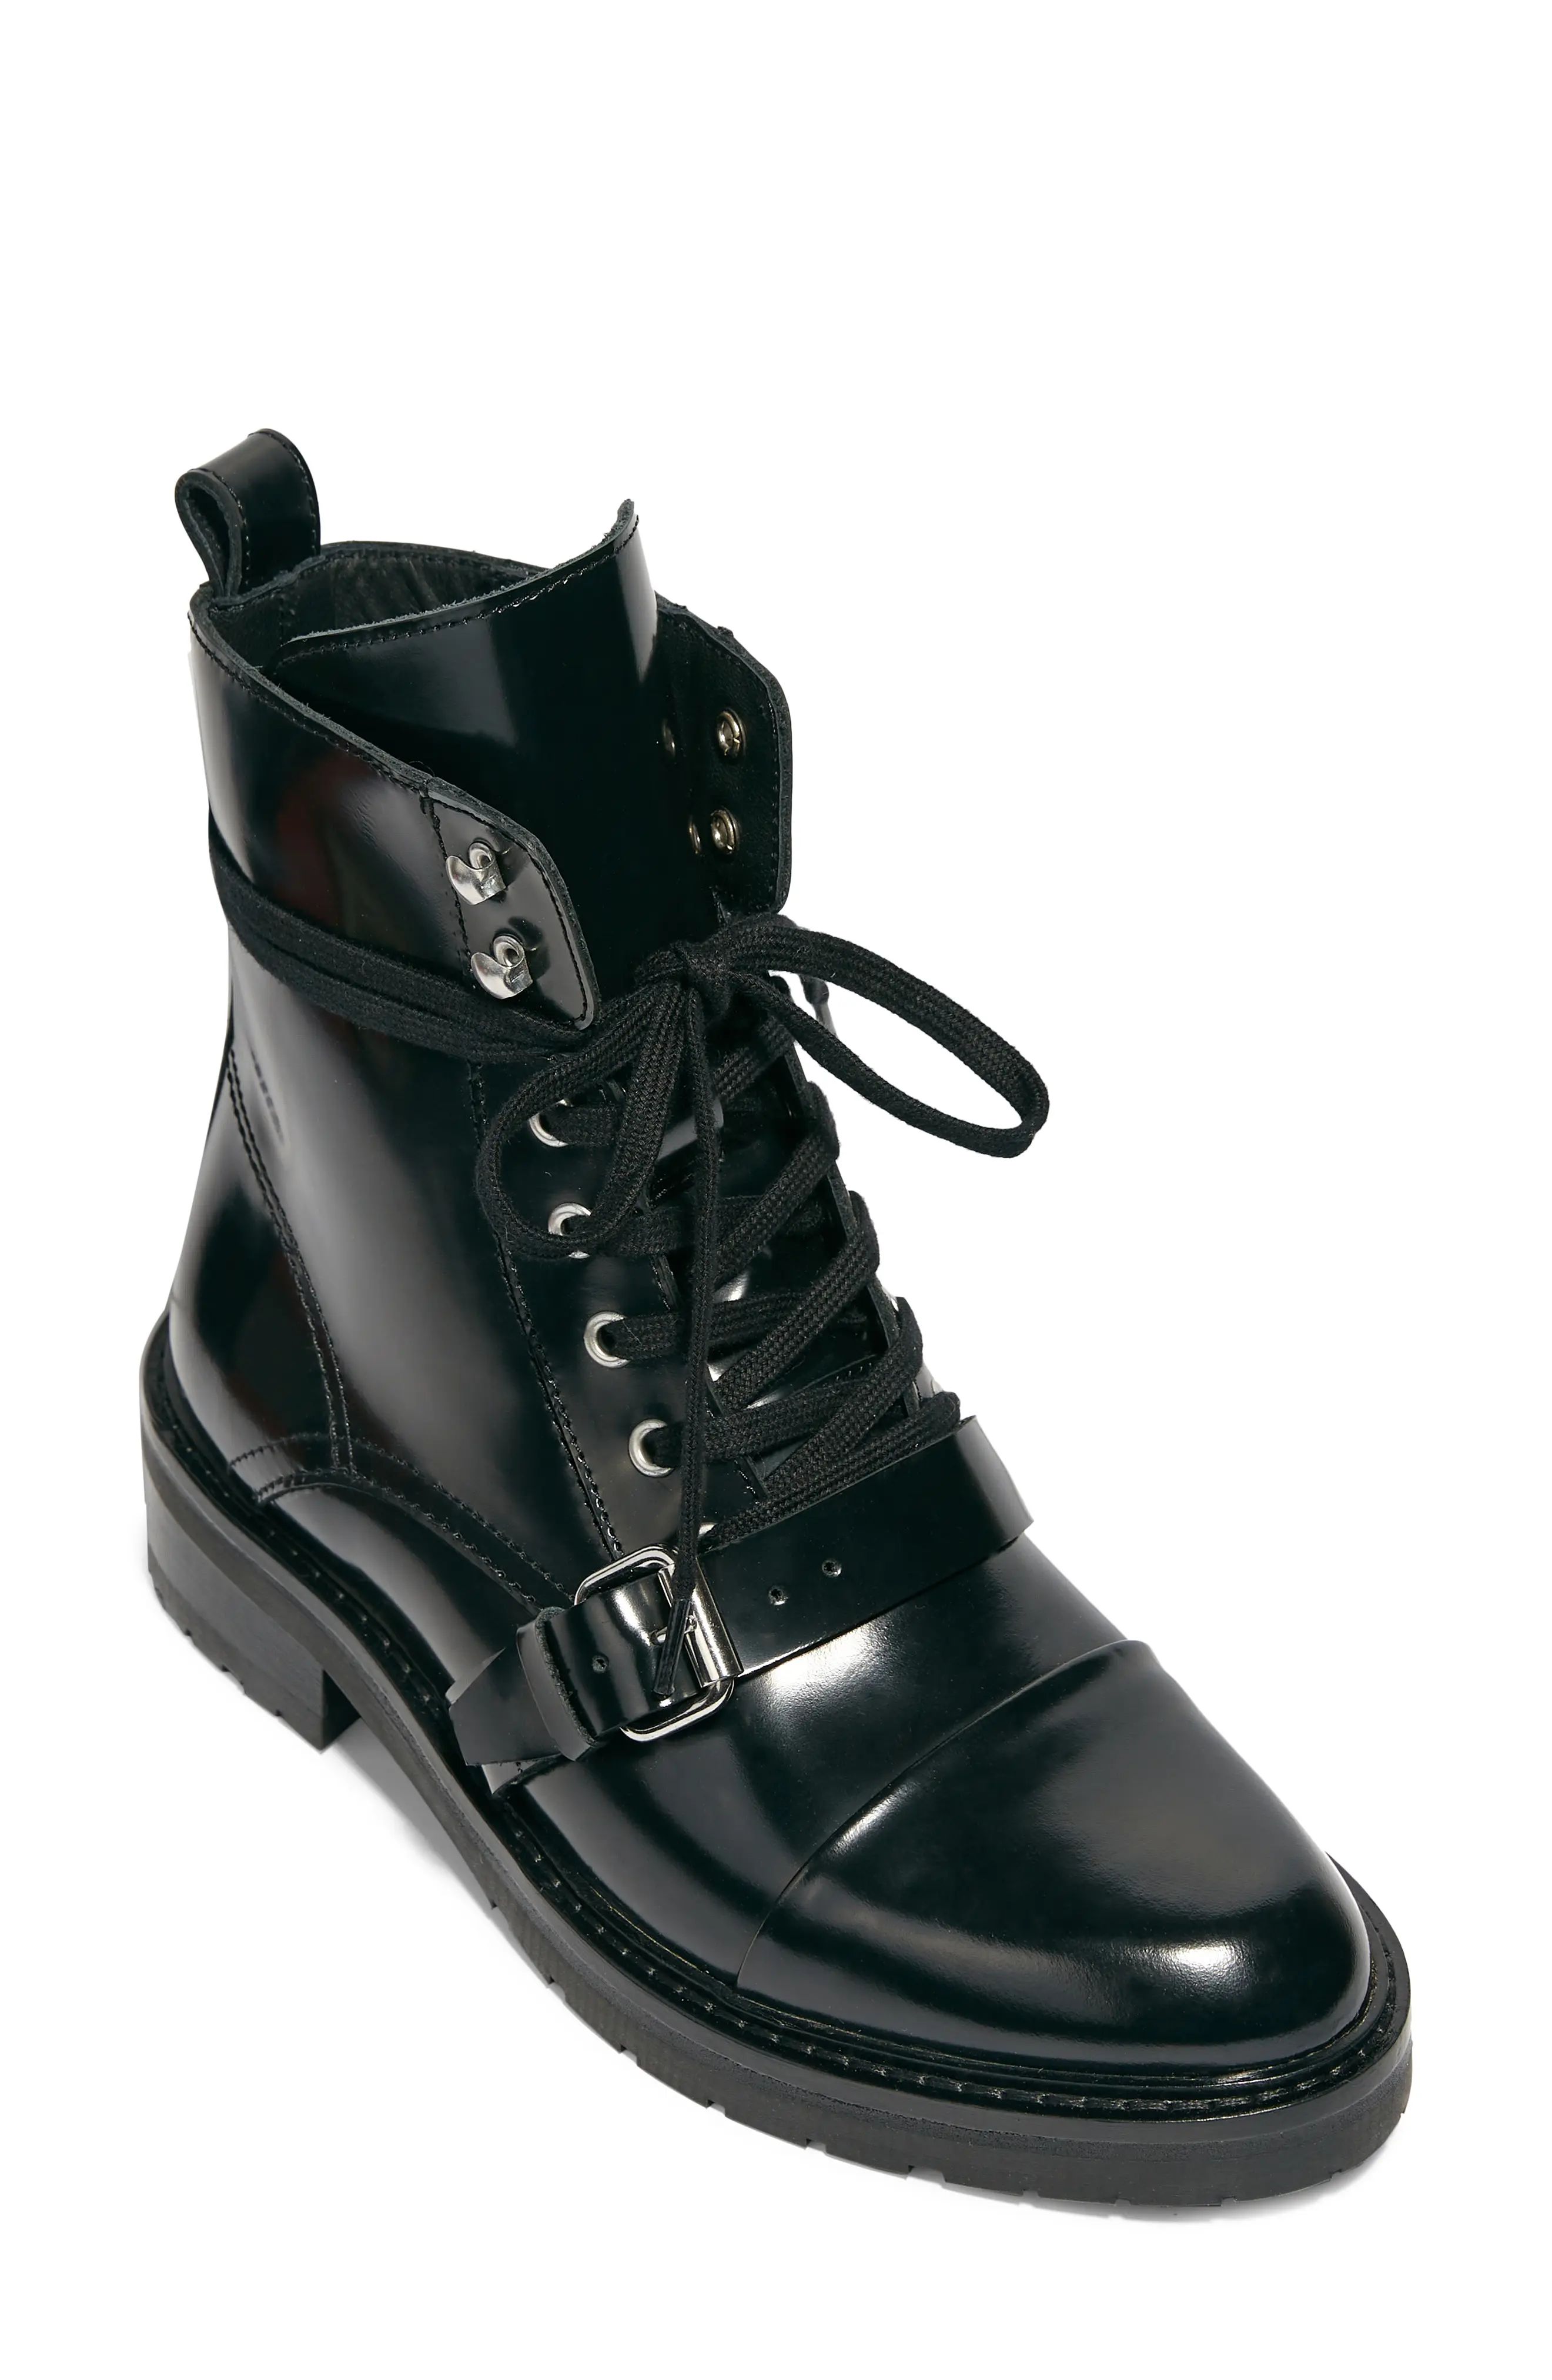 AllSaints Donita Combat Boot, Size 10Us in Black/Black Leather at Nordstrom | Nordstrom